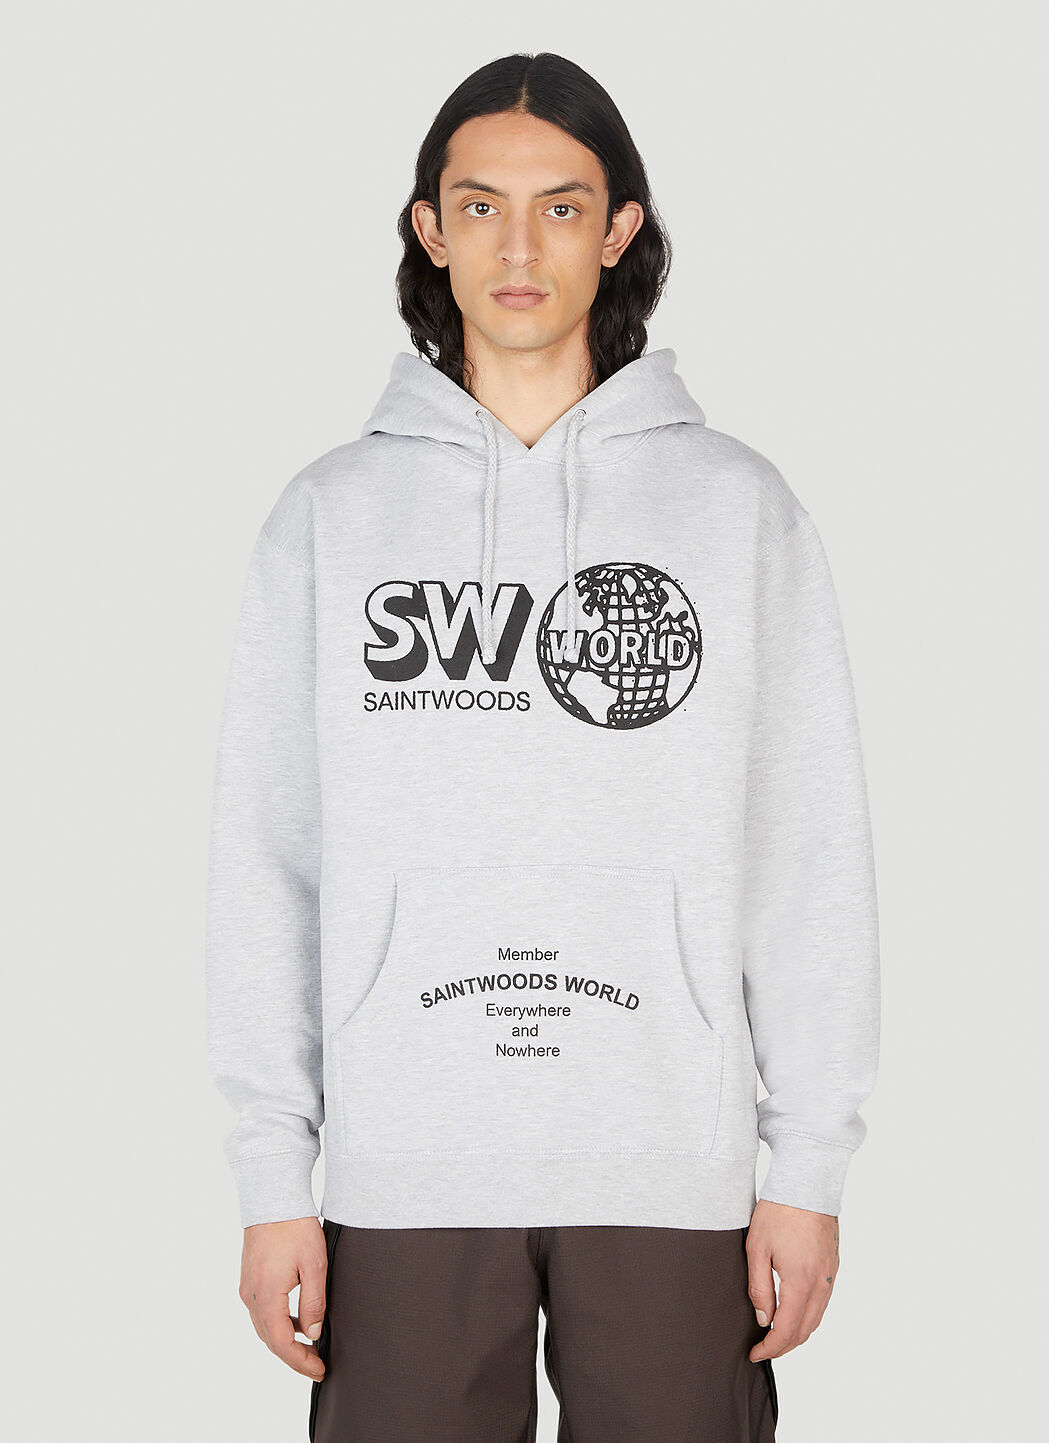 Saintwoods World Member 连帽运动衫 黑色 swo0151006